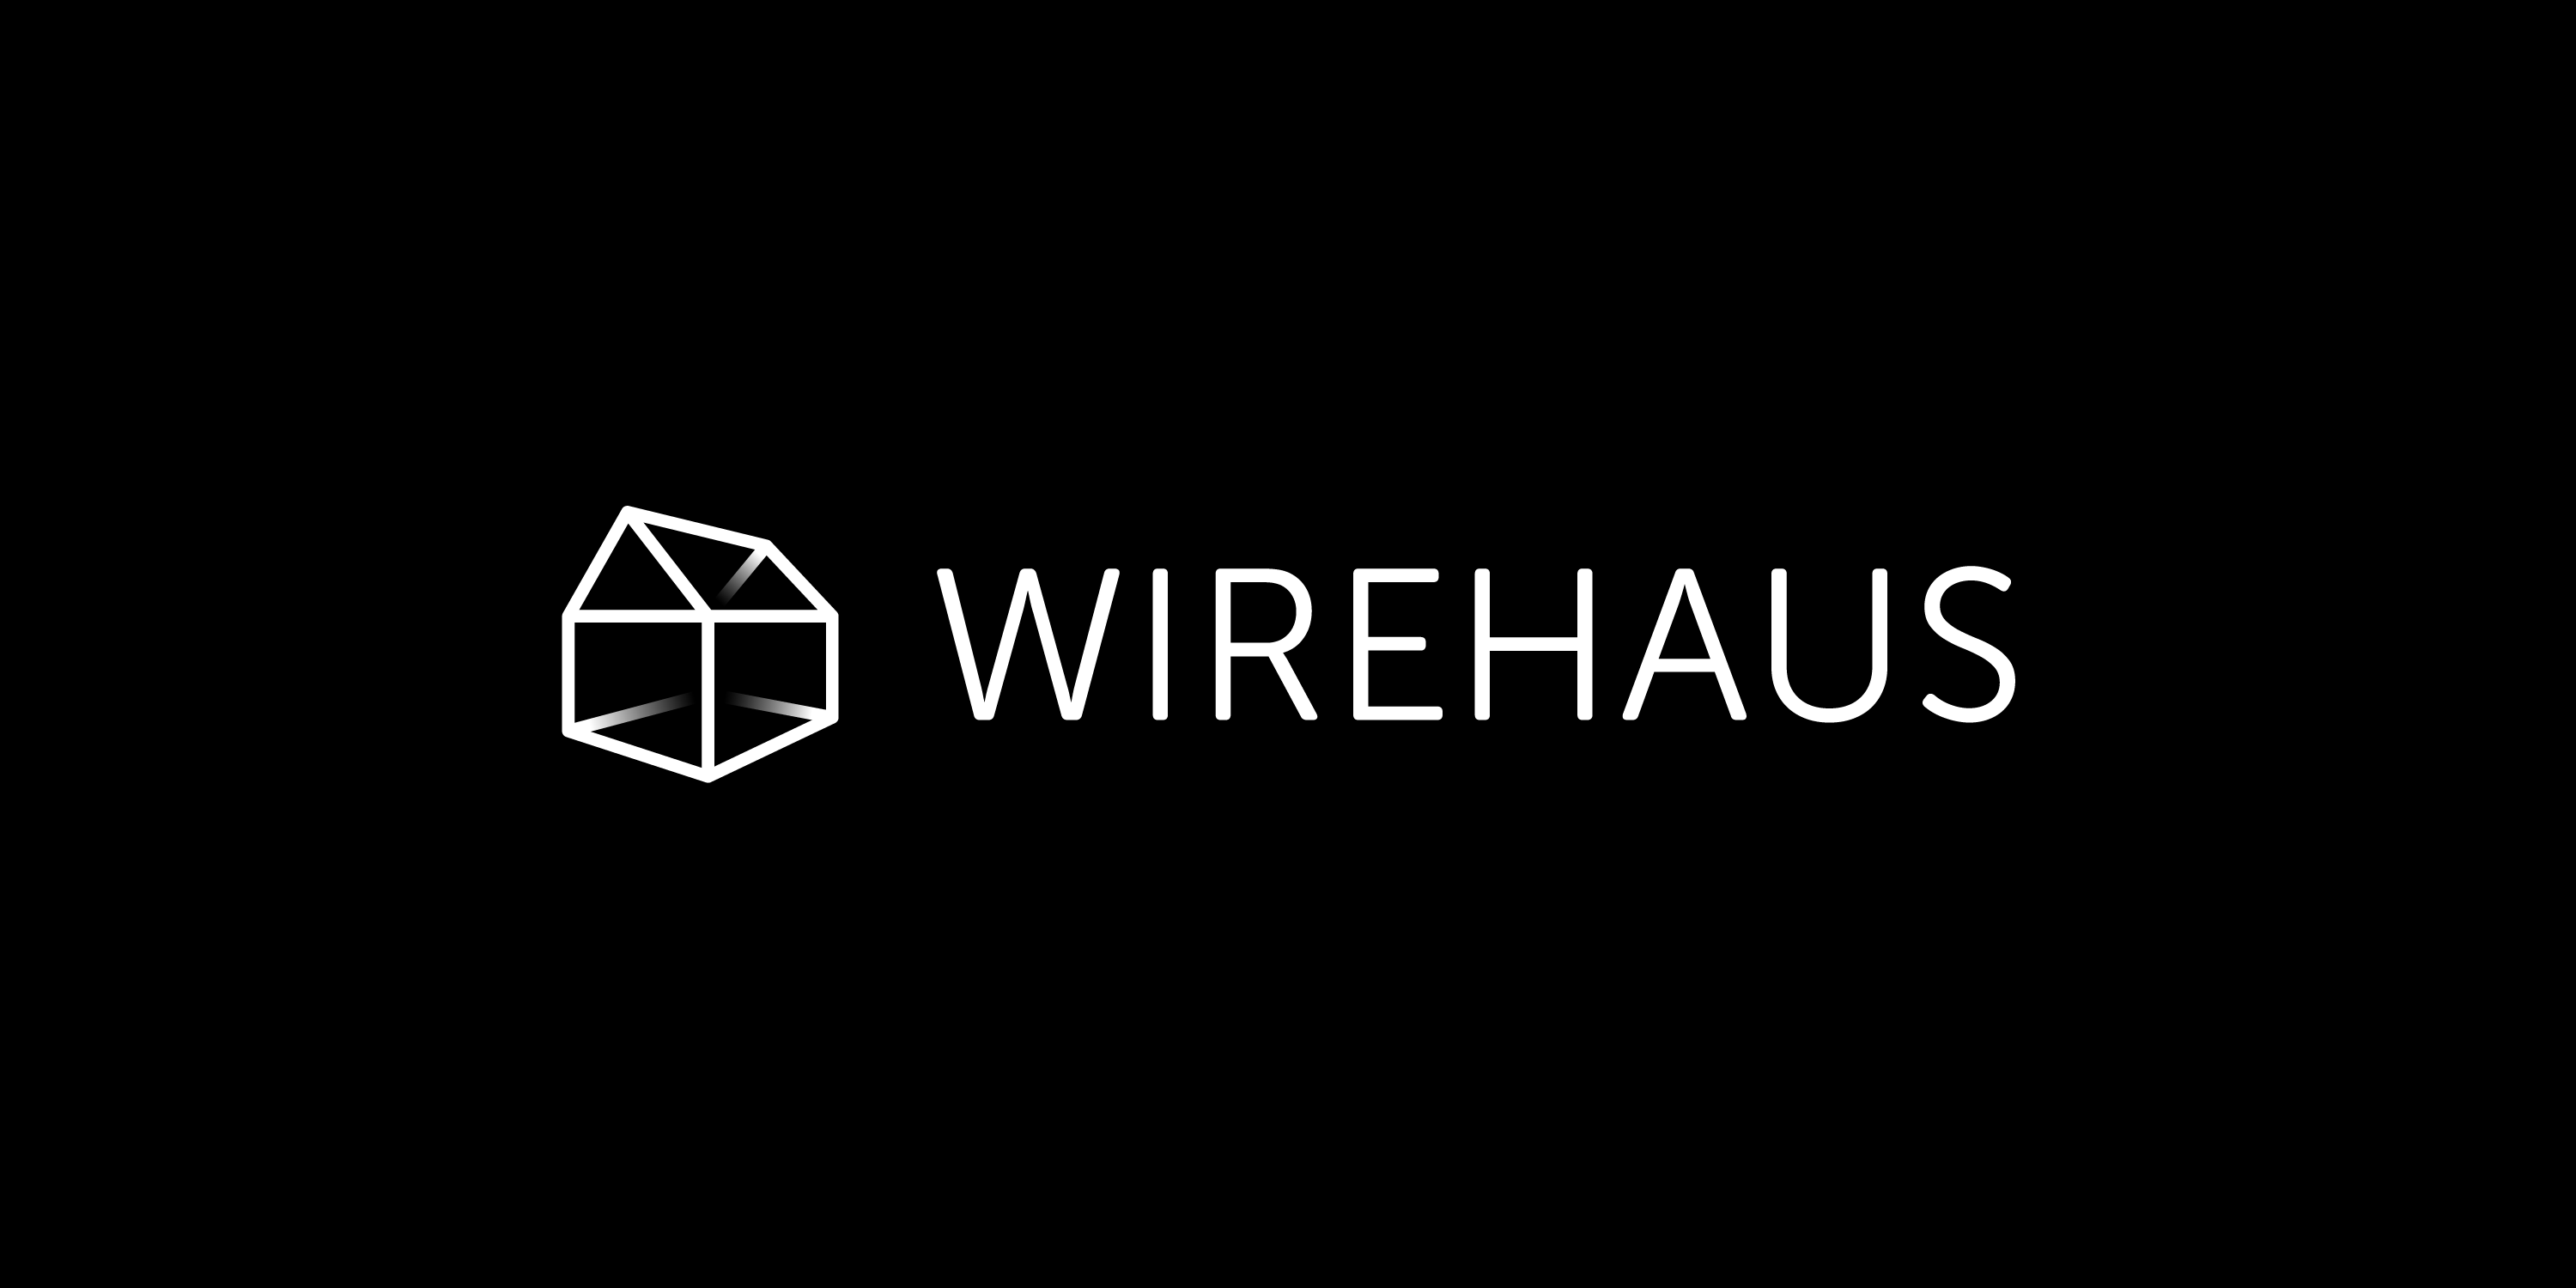 wireframe-logo-for-sale-wirehaus-bw-2